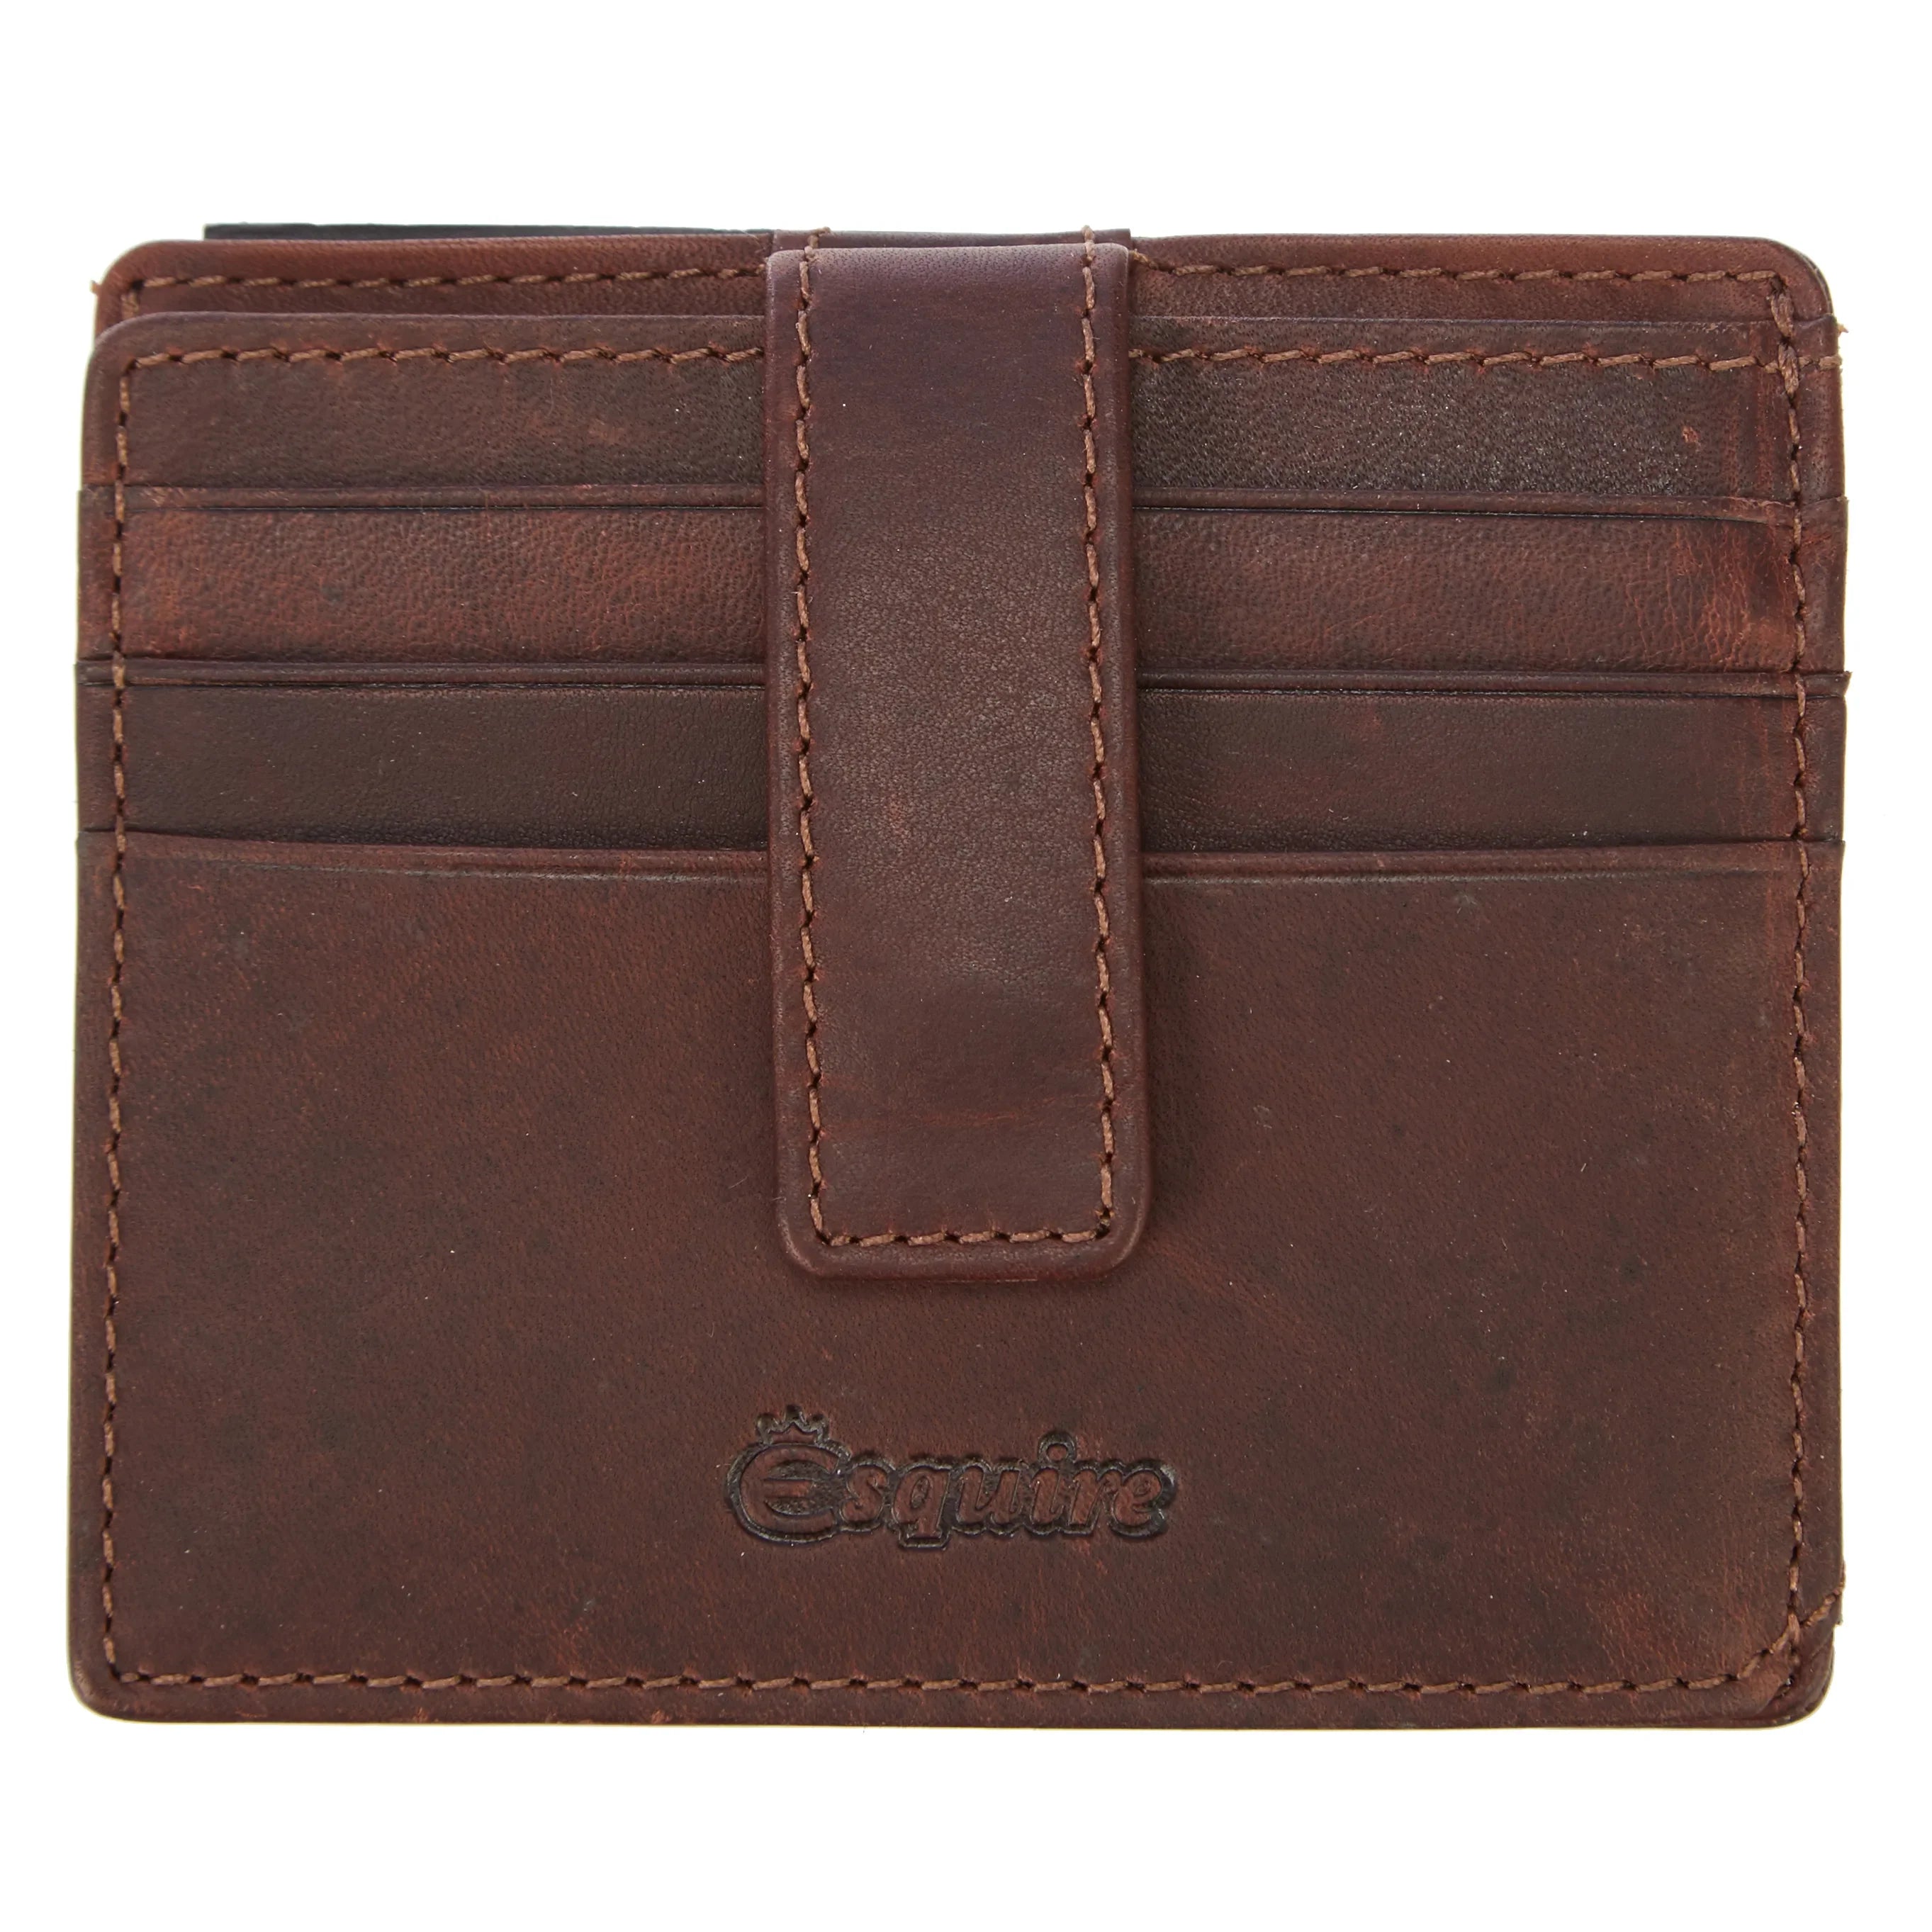 Esquire Oslo Dallas credit card holder RFID 10 cm - brown